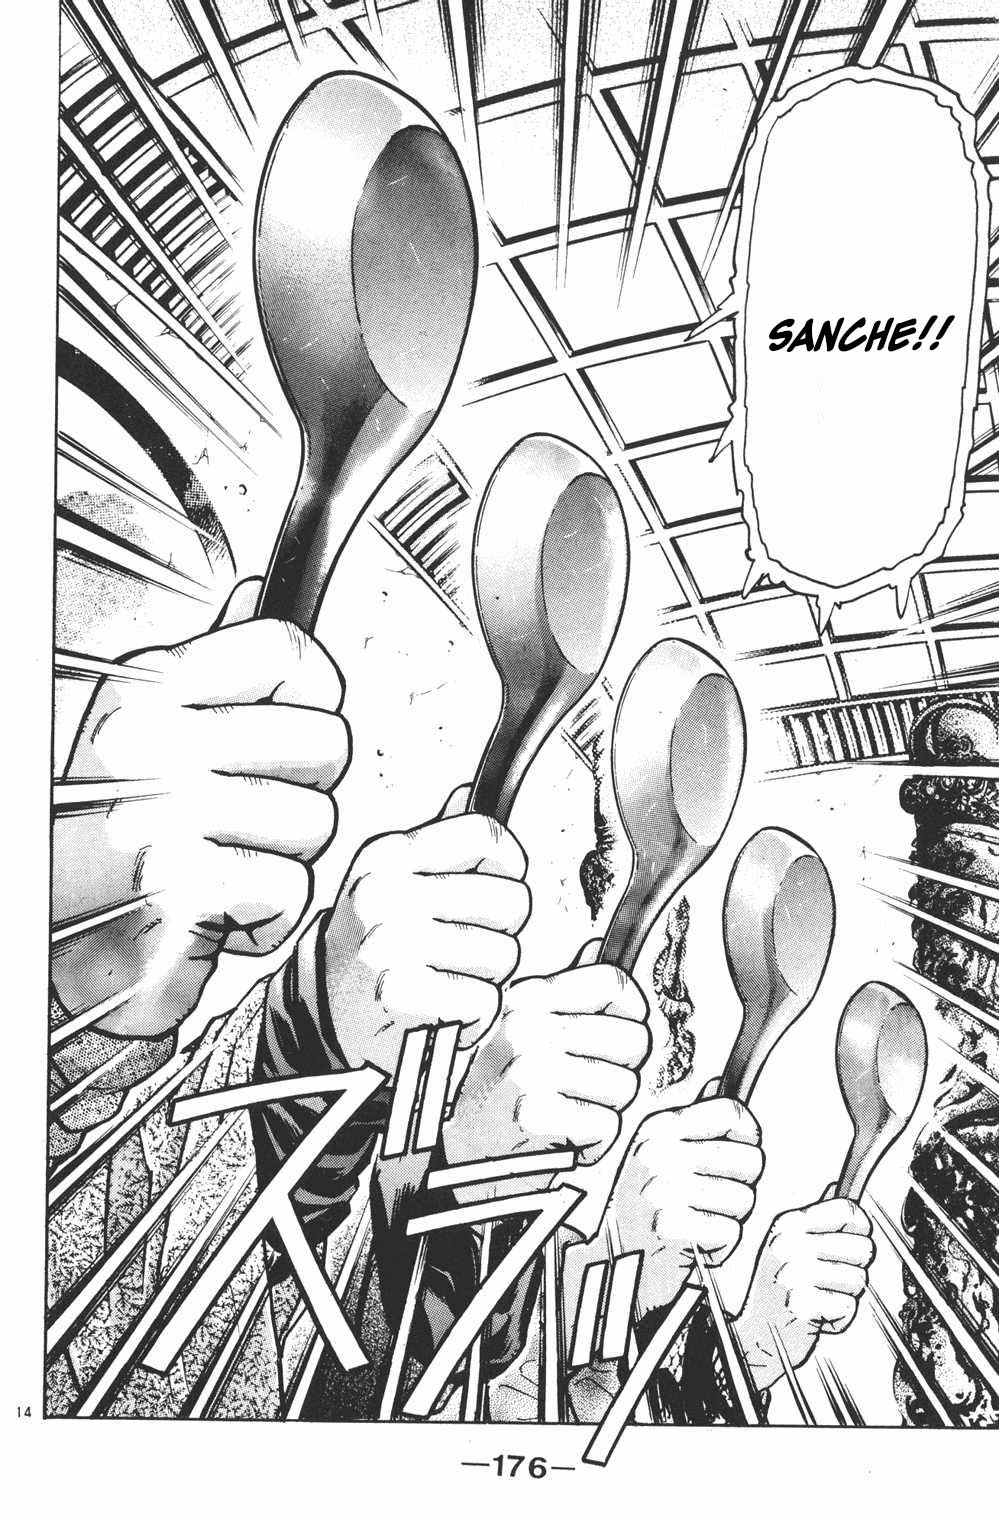 Shin Chuuka Ichiban! Vol. 4 Ch. 33 The Transformer of Soup